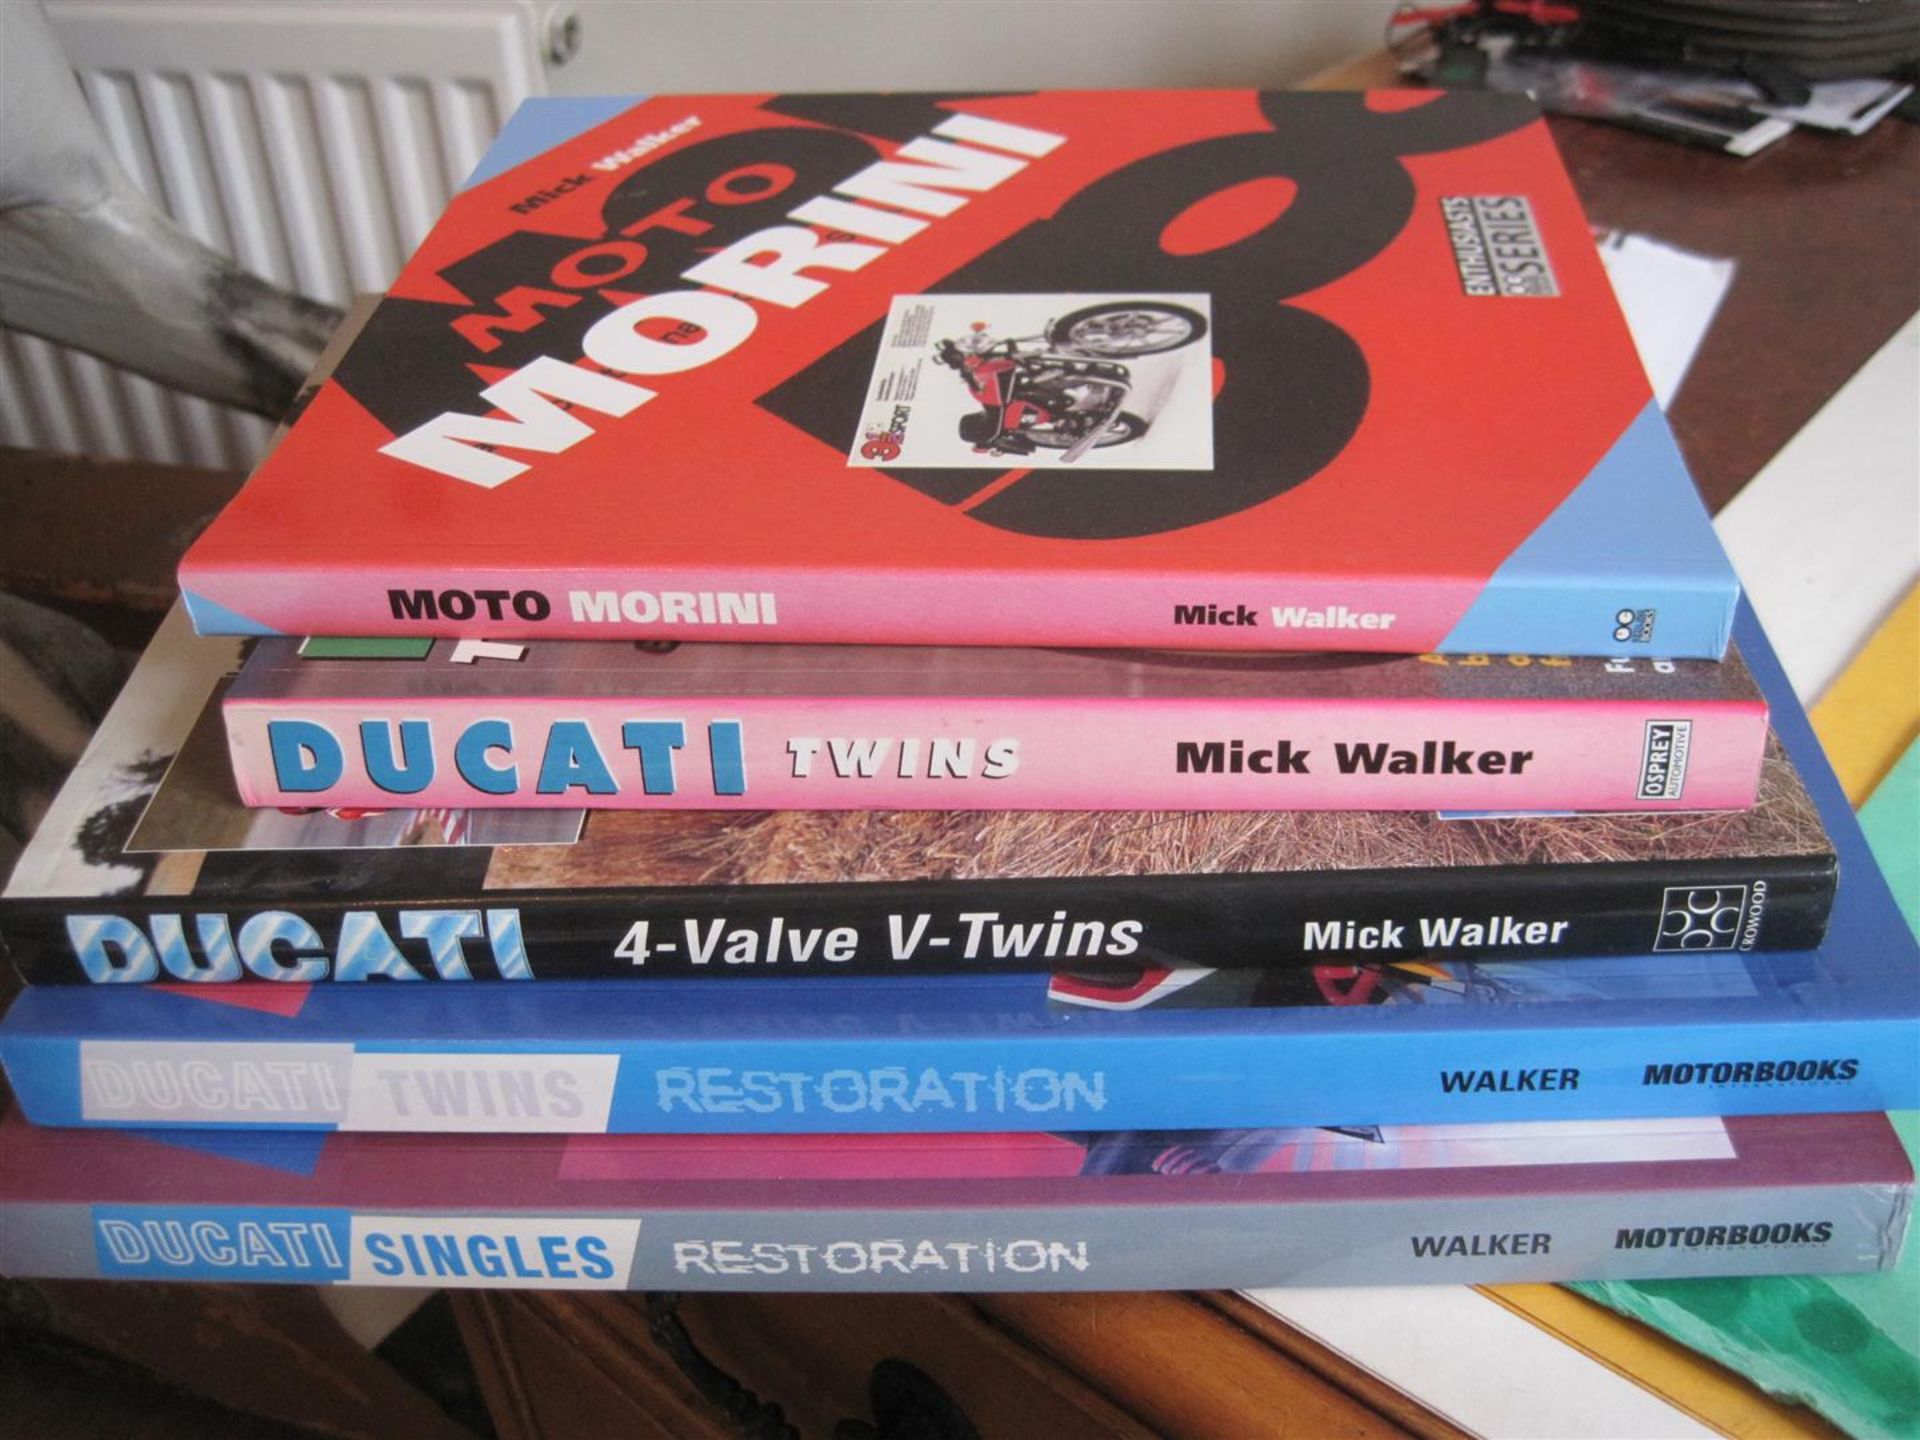 Mick Walker, 5 signed volumes on Ducati and Morini: Singles & Twins Restoration, Twins, 4 valve V